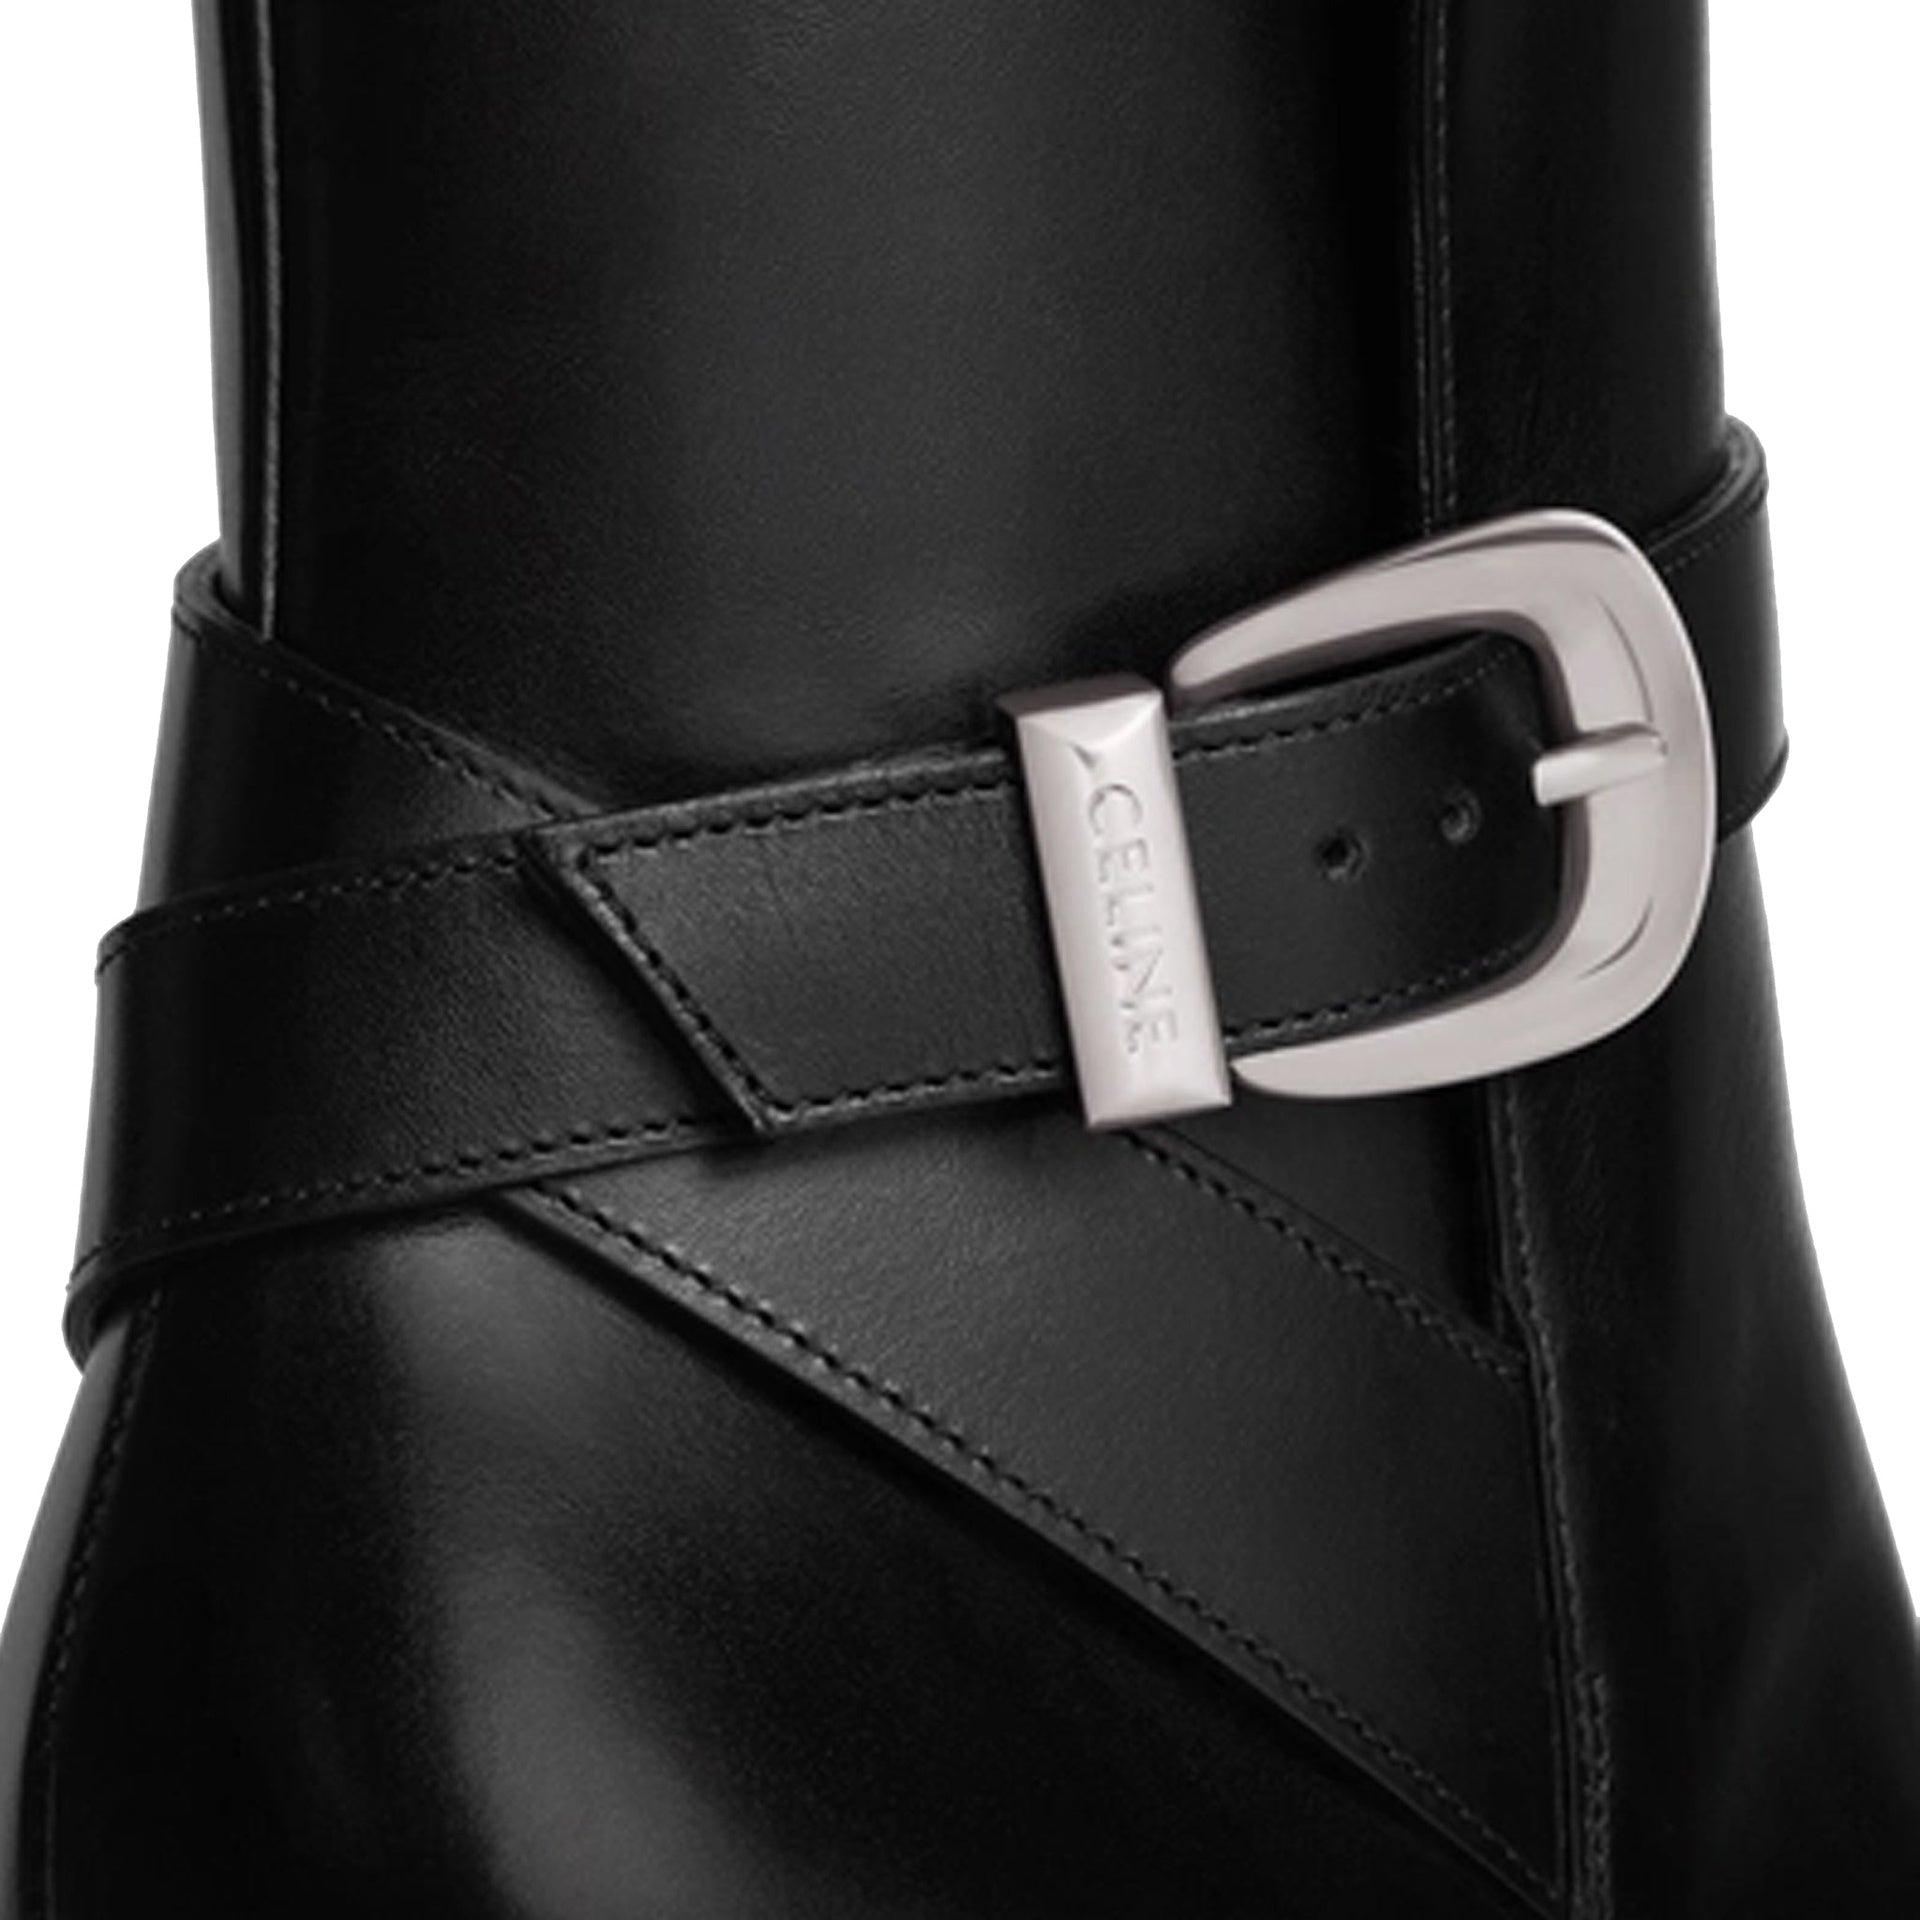 Celine Jodphur Leather Boots